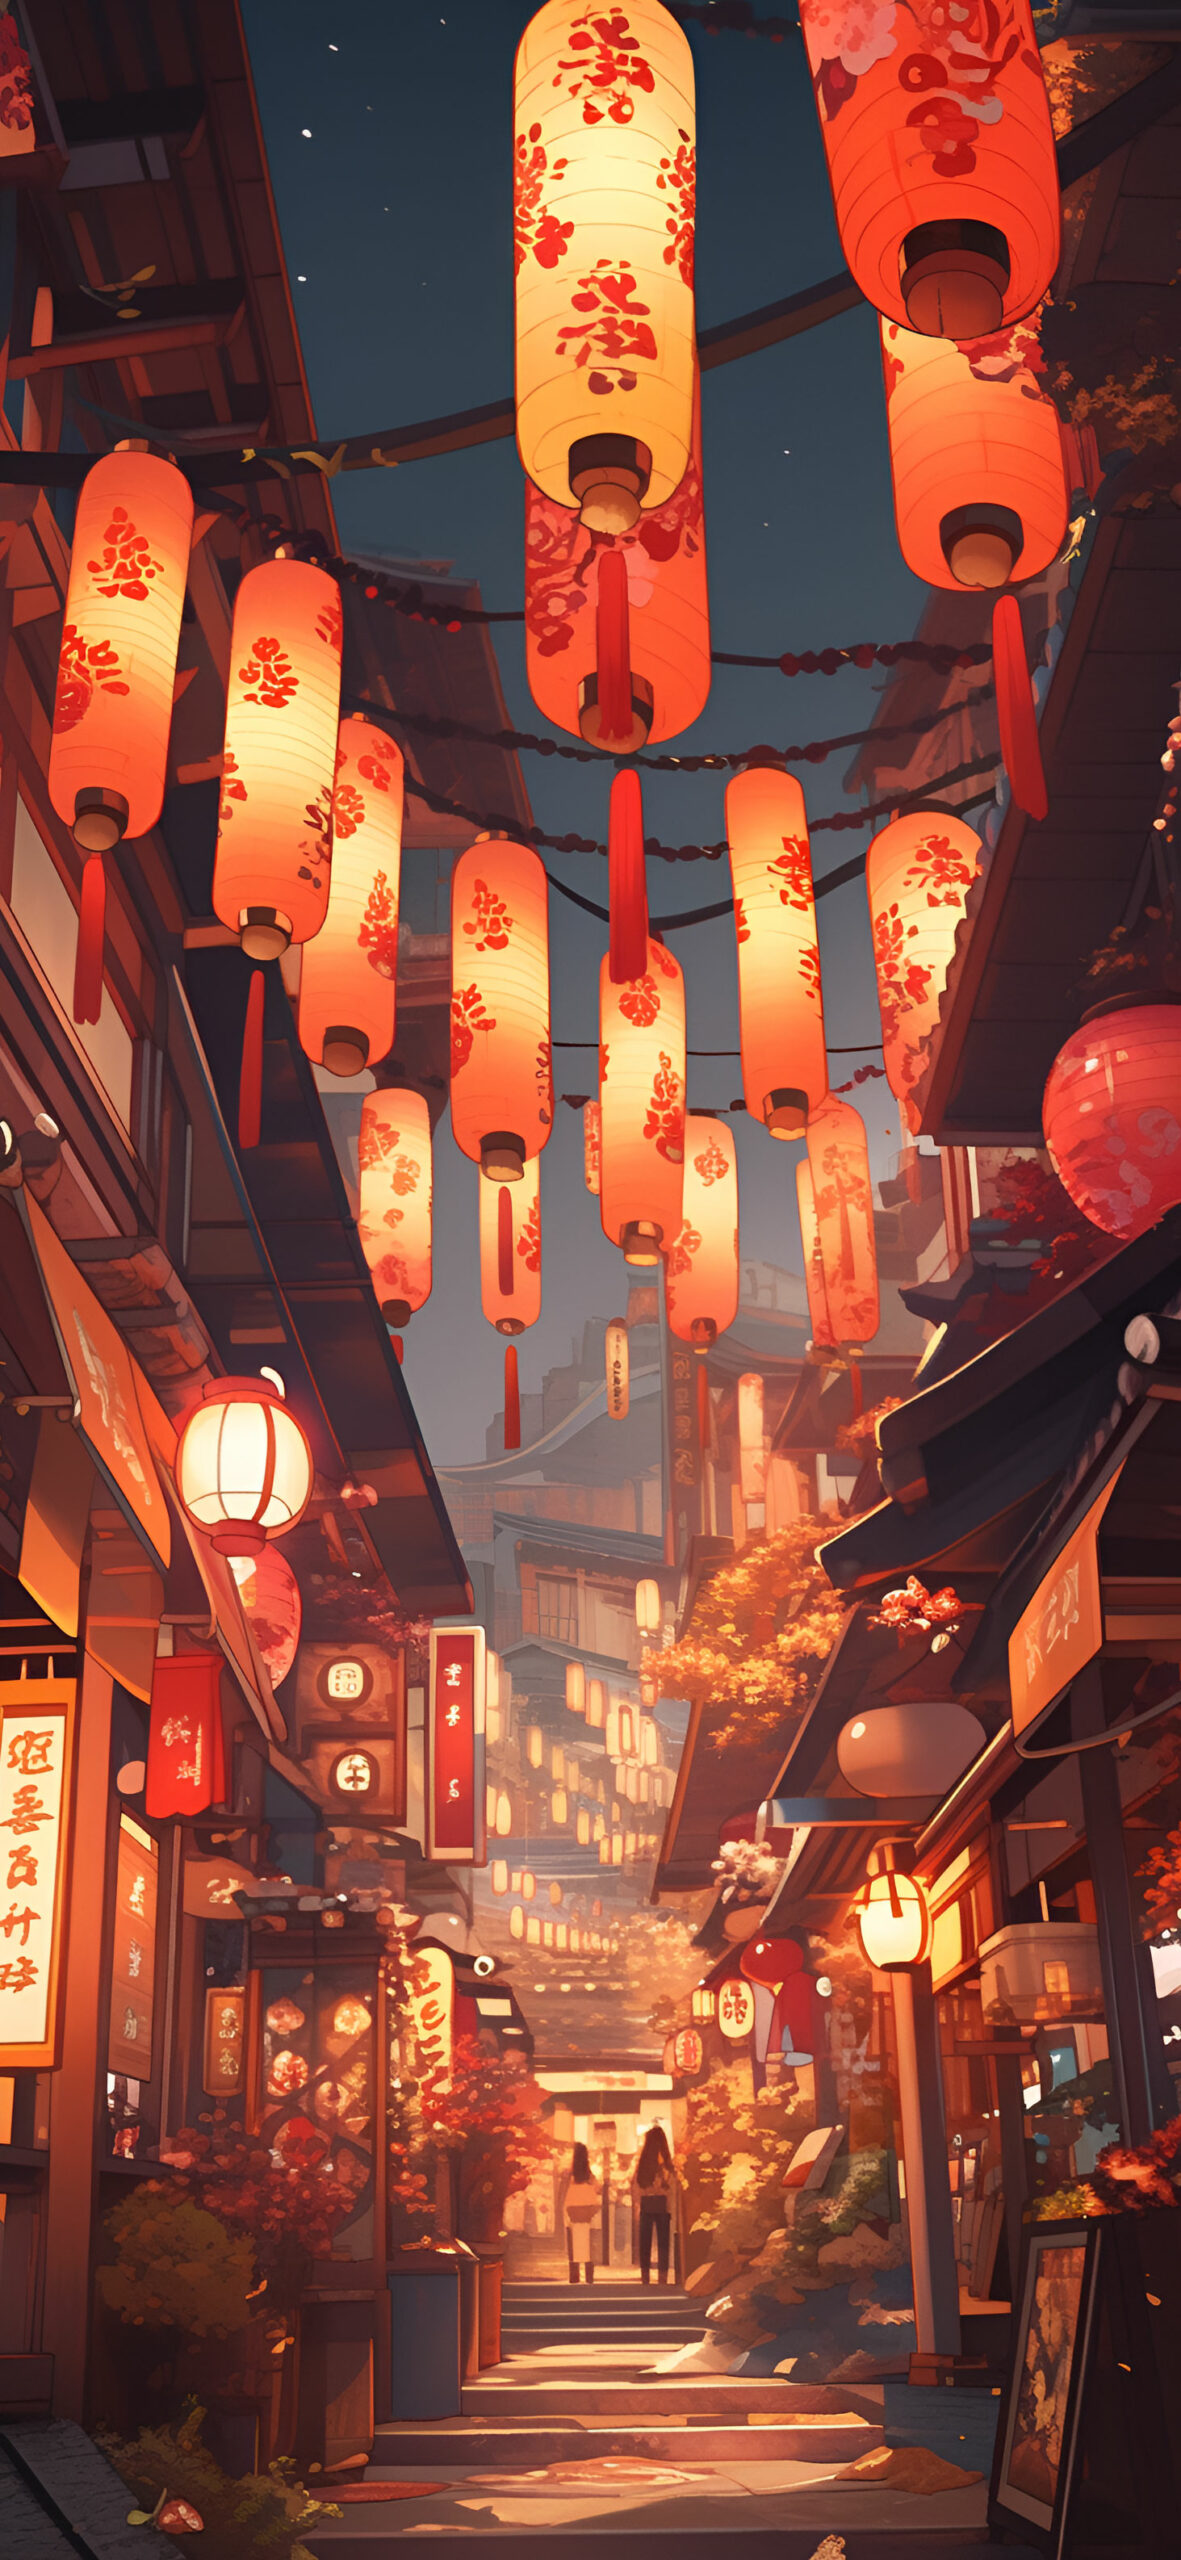 Cozy japan style aesthetic wallpaper Beautiful paper lanterns